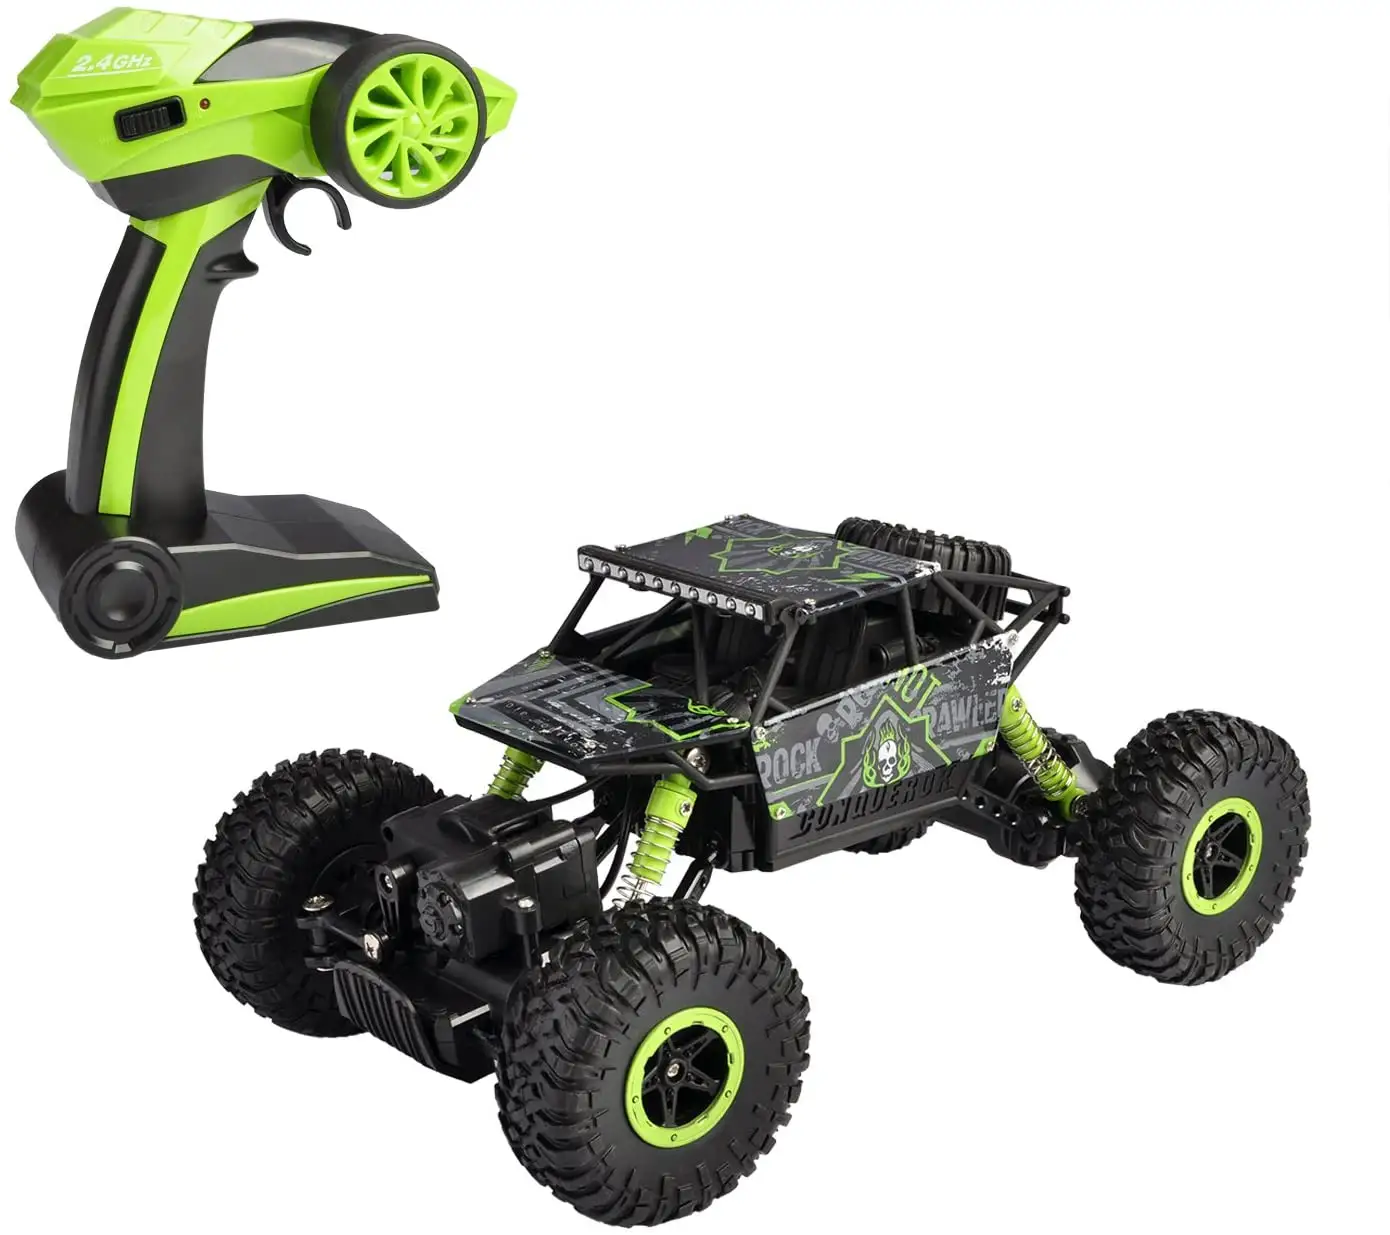 ZG Cool gift high speed toy car radio control car green remote control car for kid